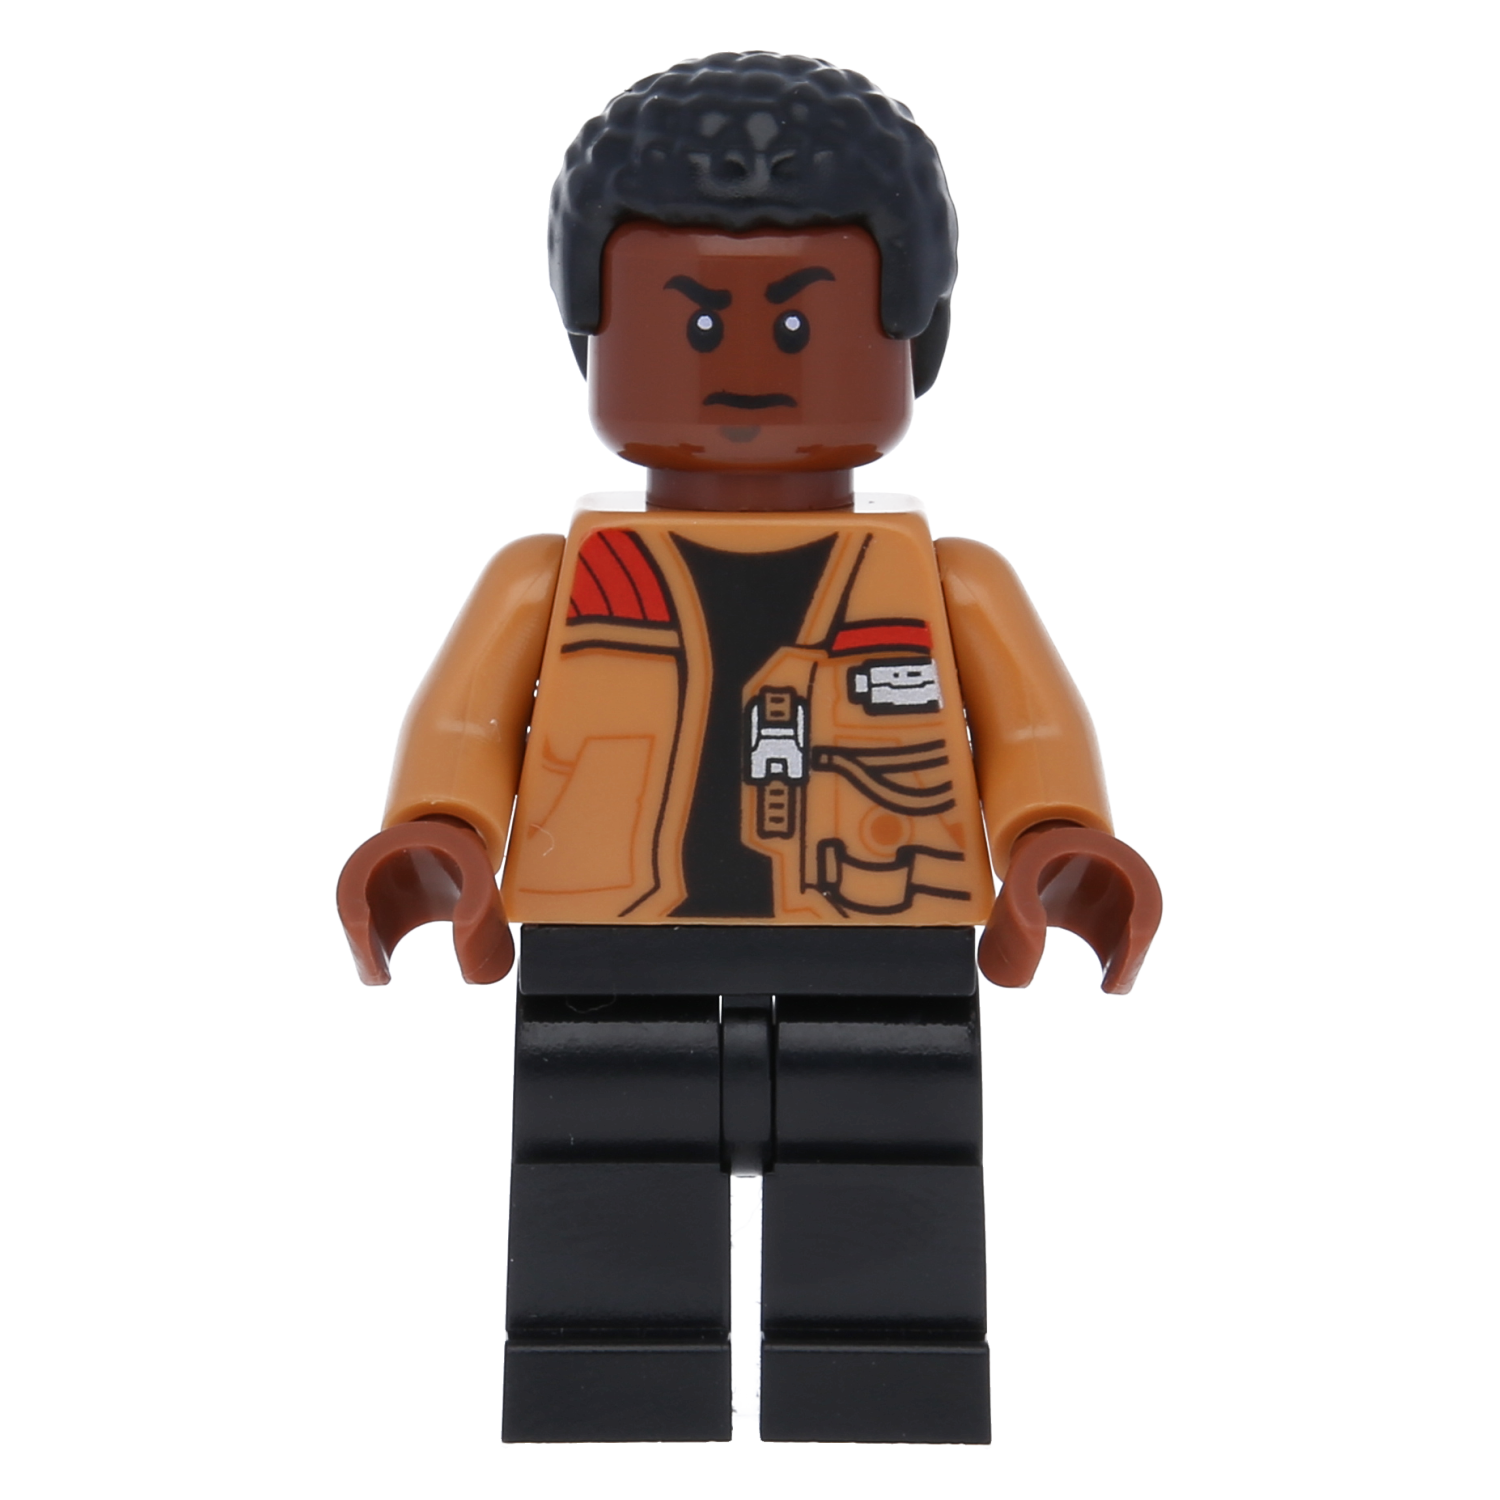 LEGO Star Wars Minifigure - Finn